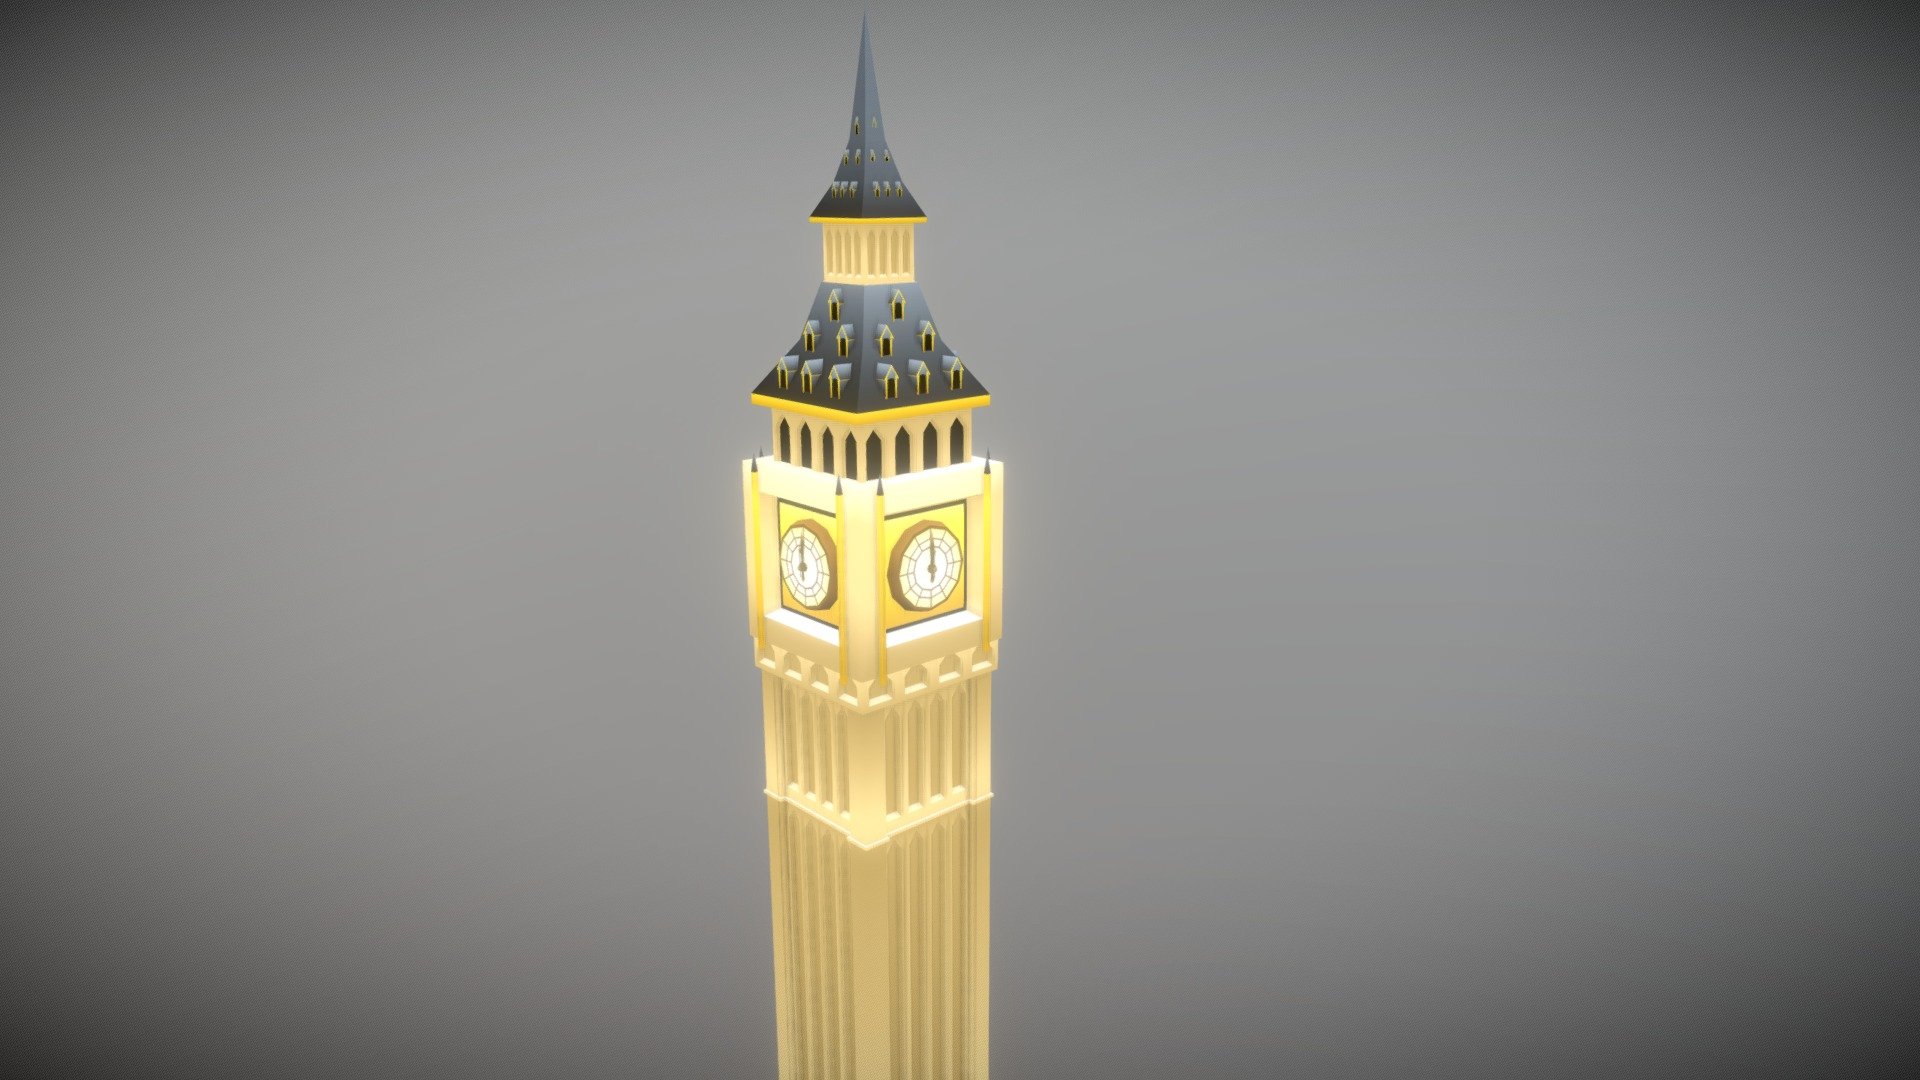 Big Ben (Elizabeth Tower)